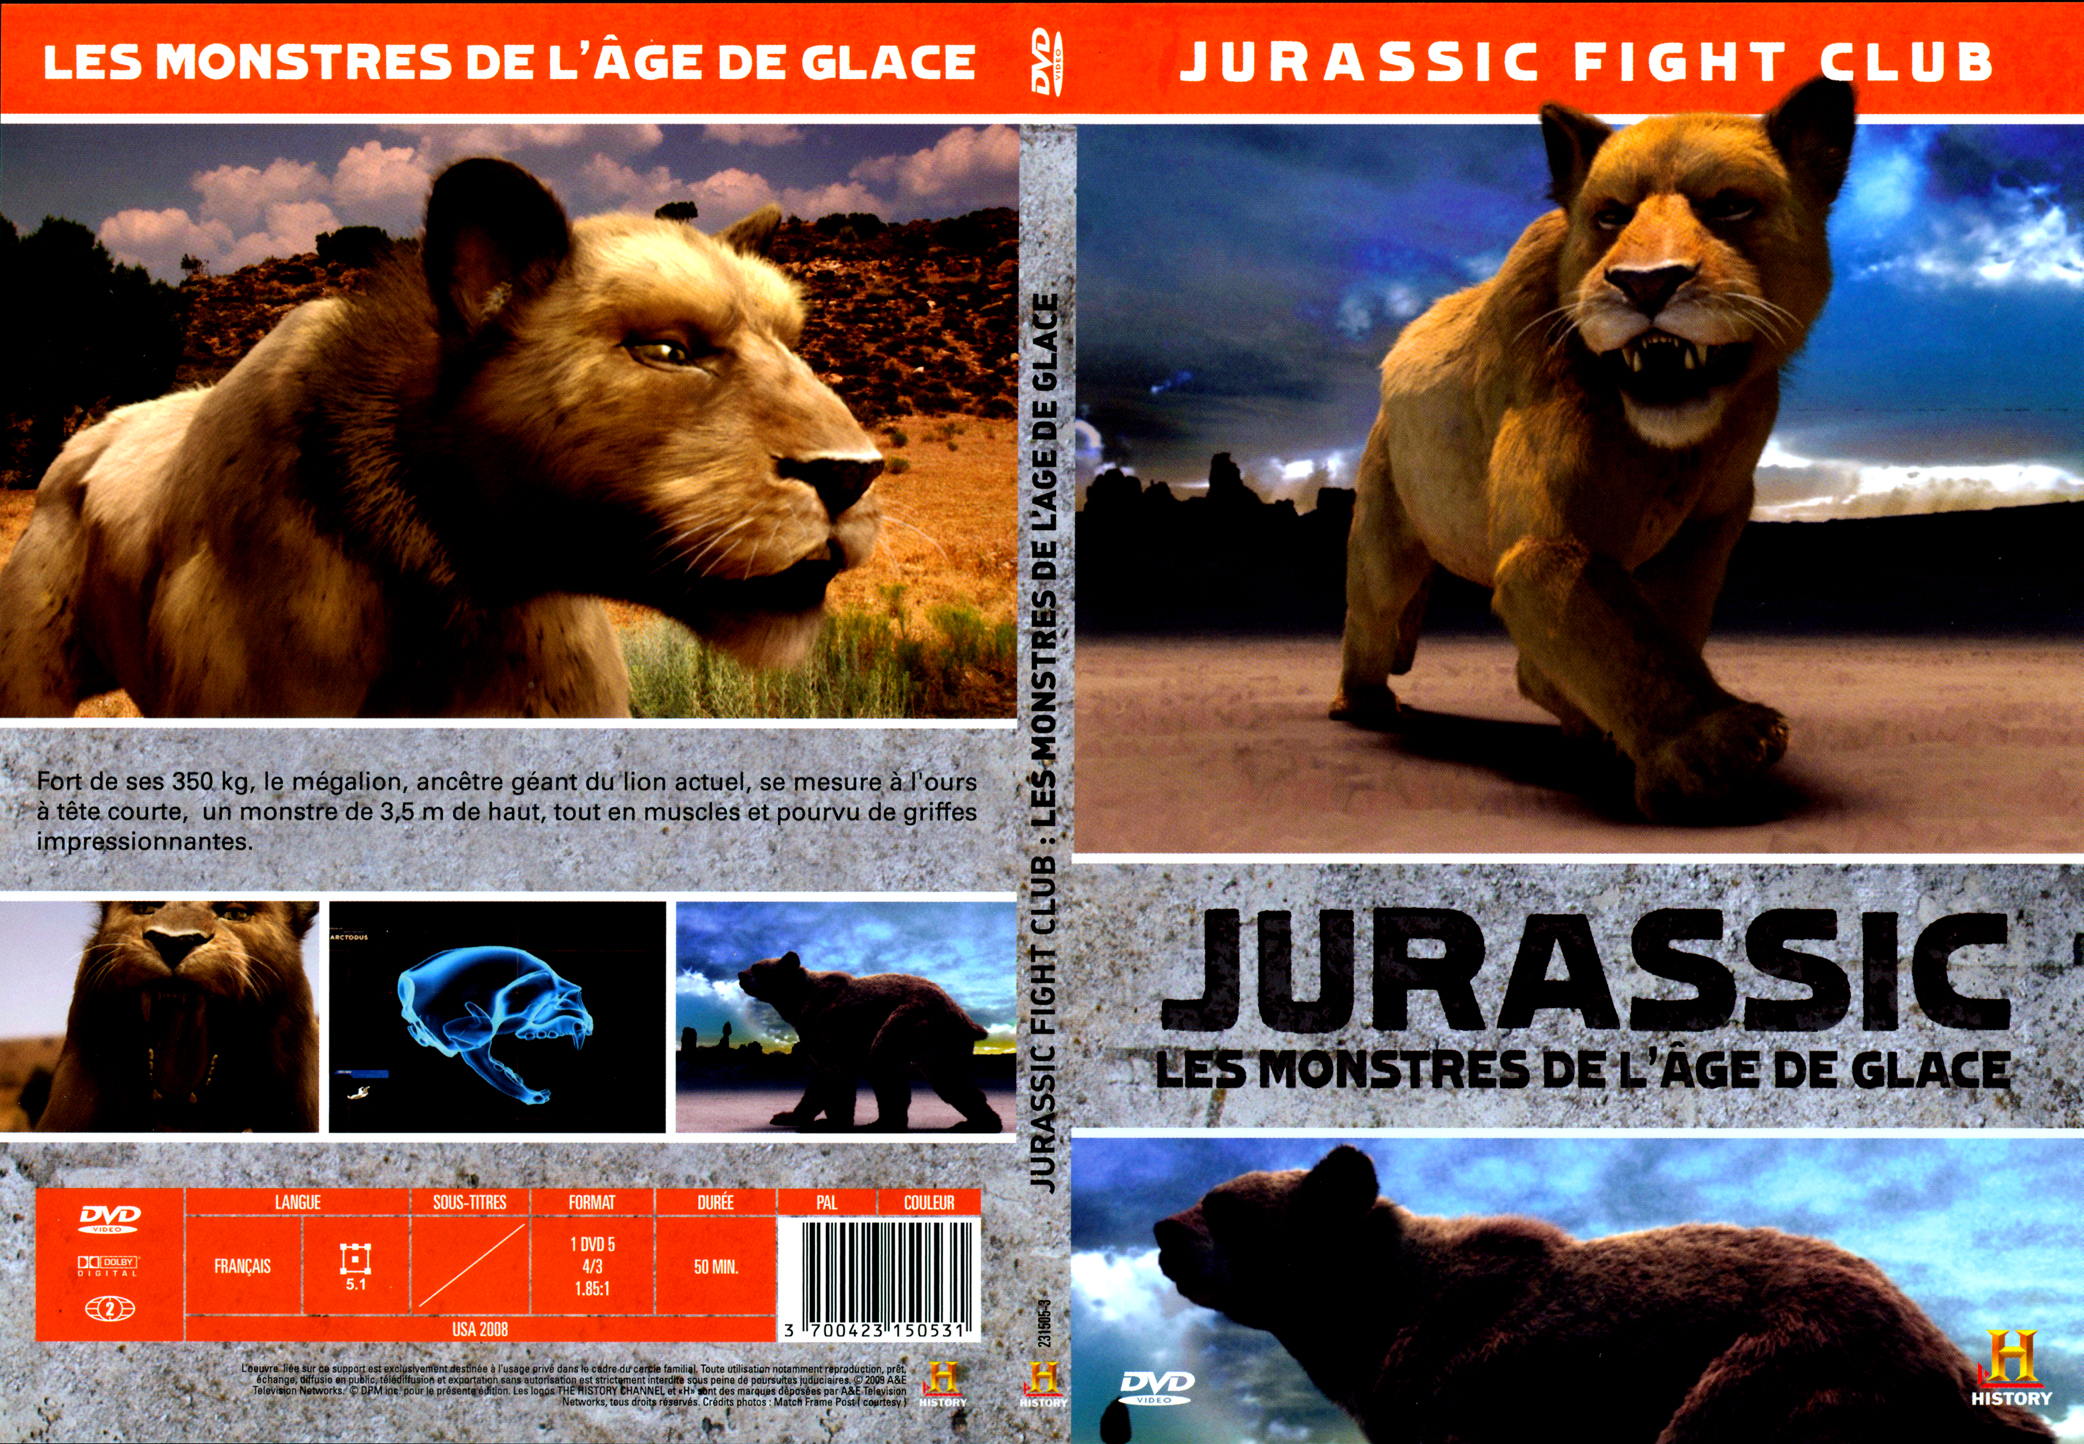 Jaquette DVD Jurassic Les monstres de l